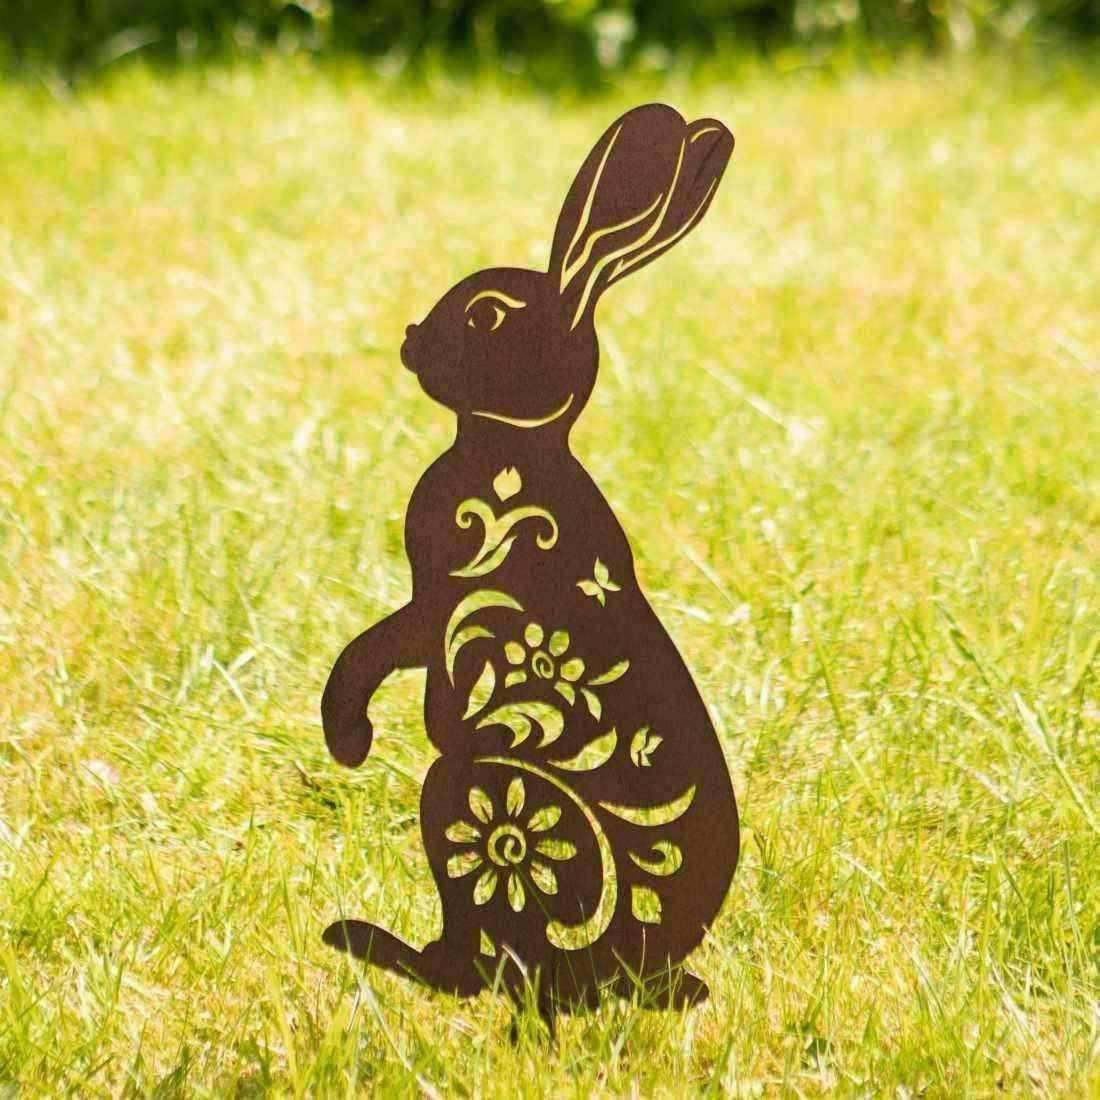 Decorative Metal Rabbit Garden Silhouette - The Farthing